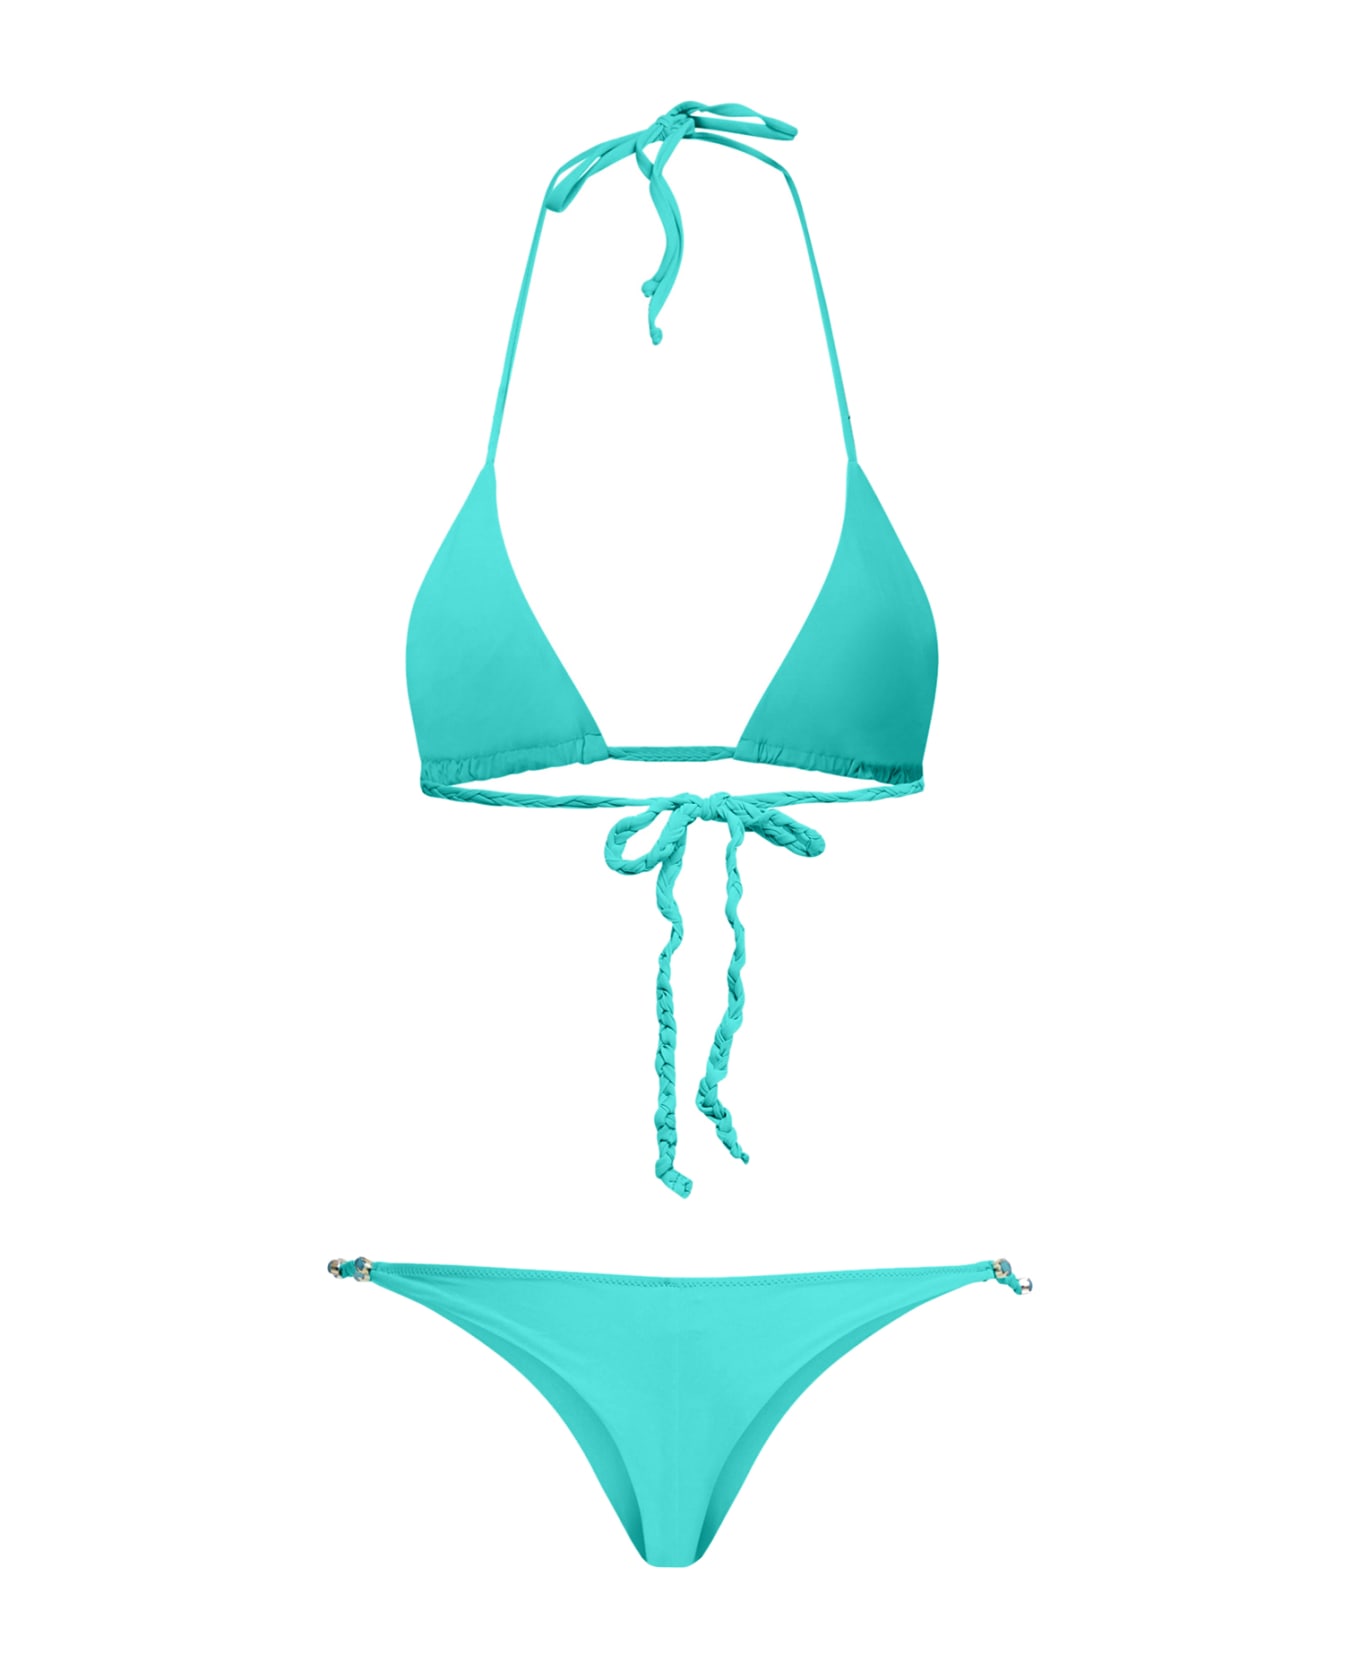 Sucrette Bikini - Verde Tiffany